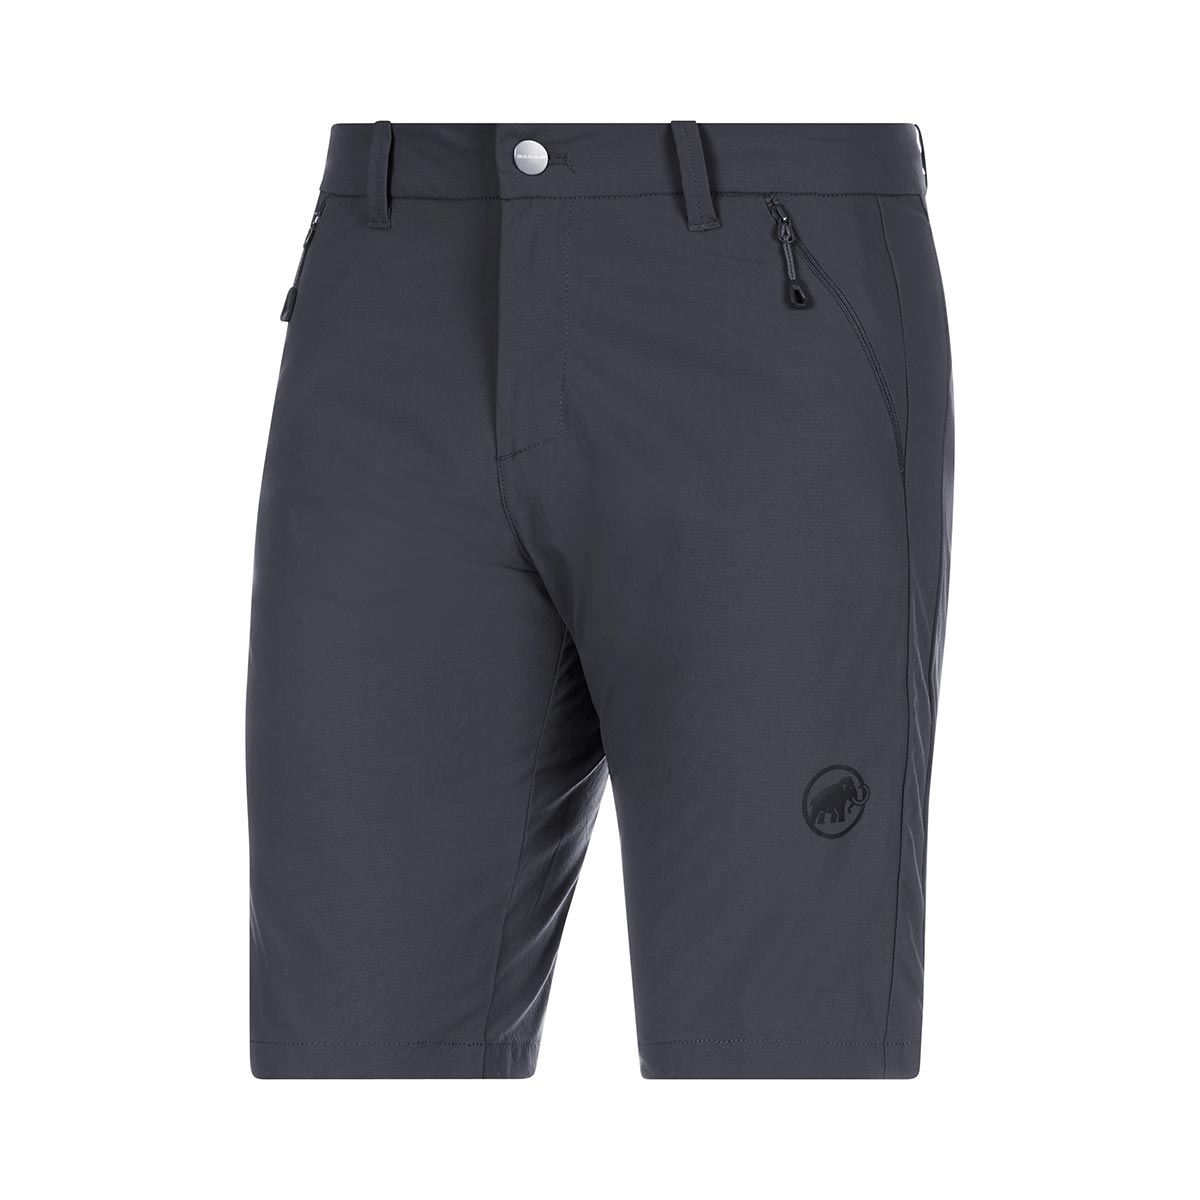 Mammut Hiking Shorts, men's :: Moontrail